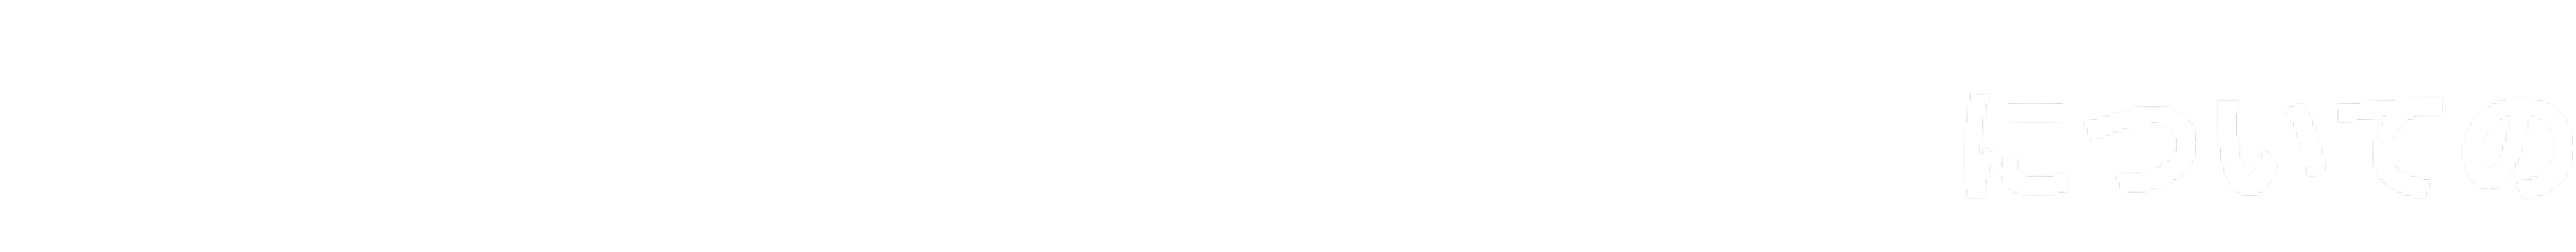 katsujika withDX Suite についての